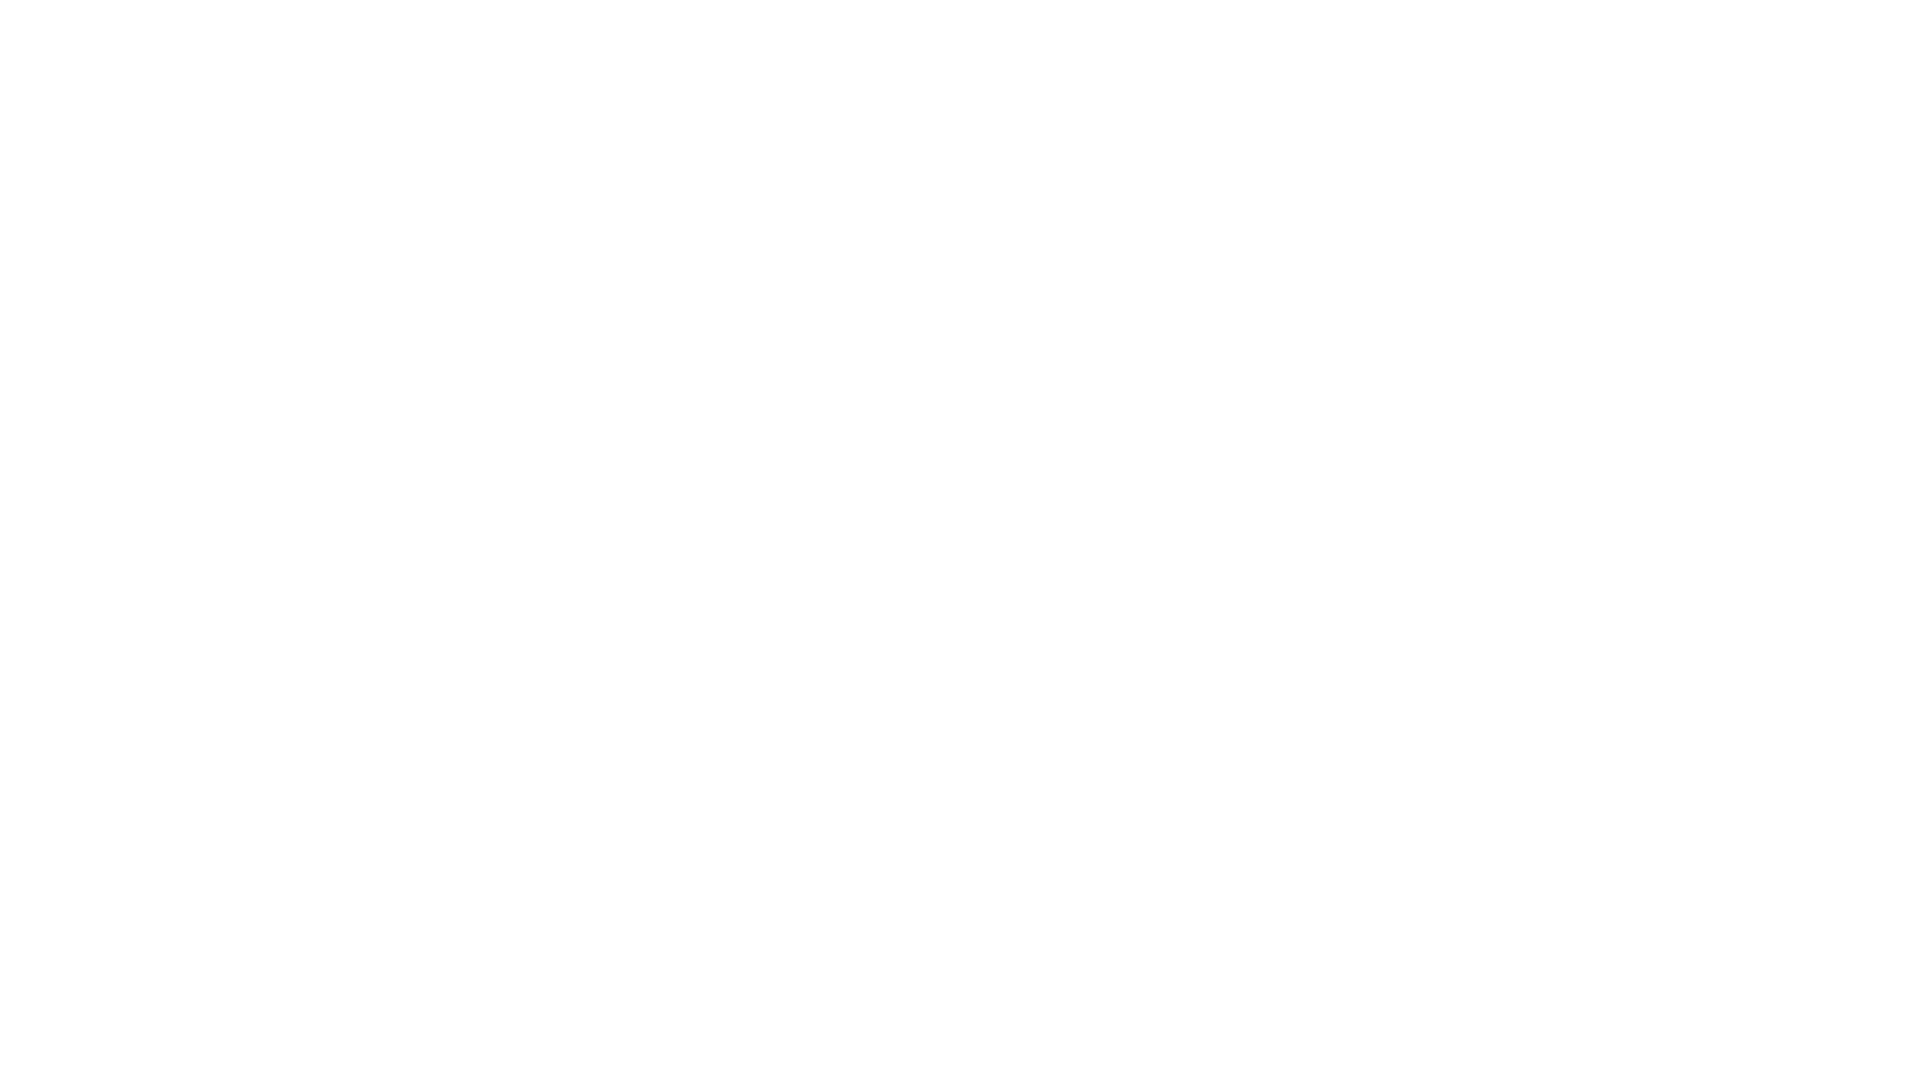 METHOD_ANIMATION_logo_white.png